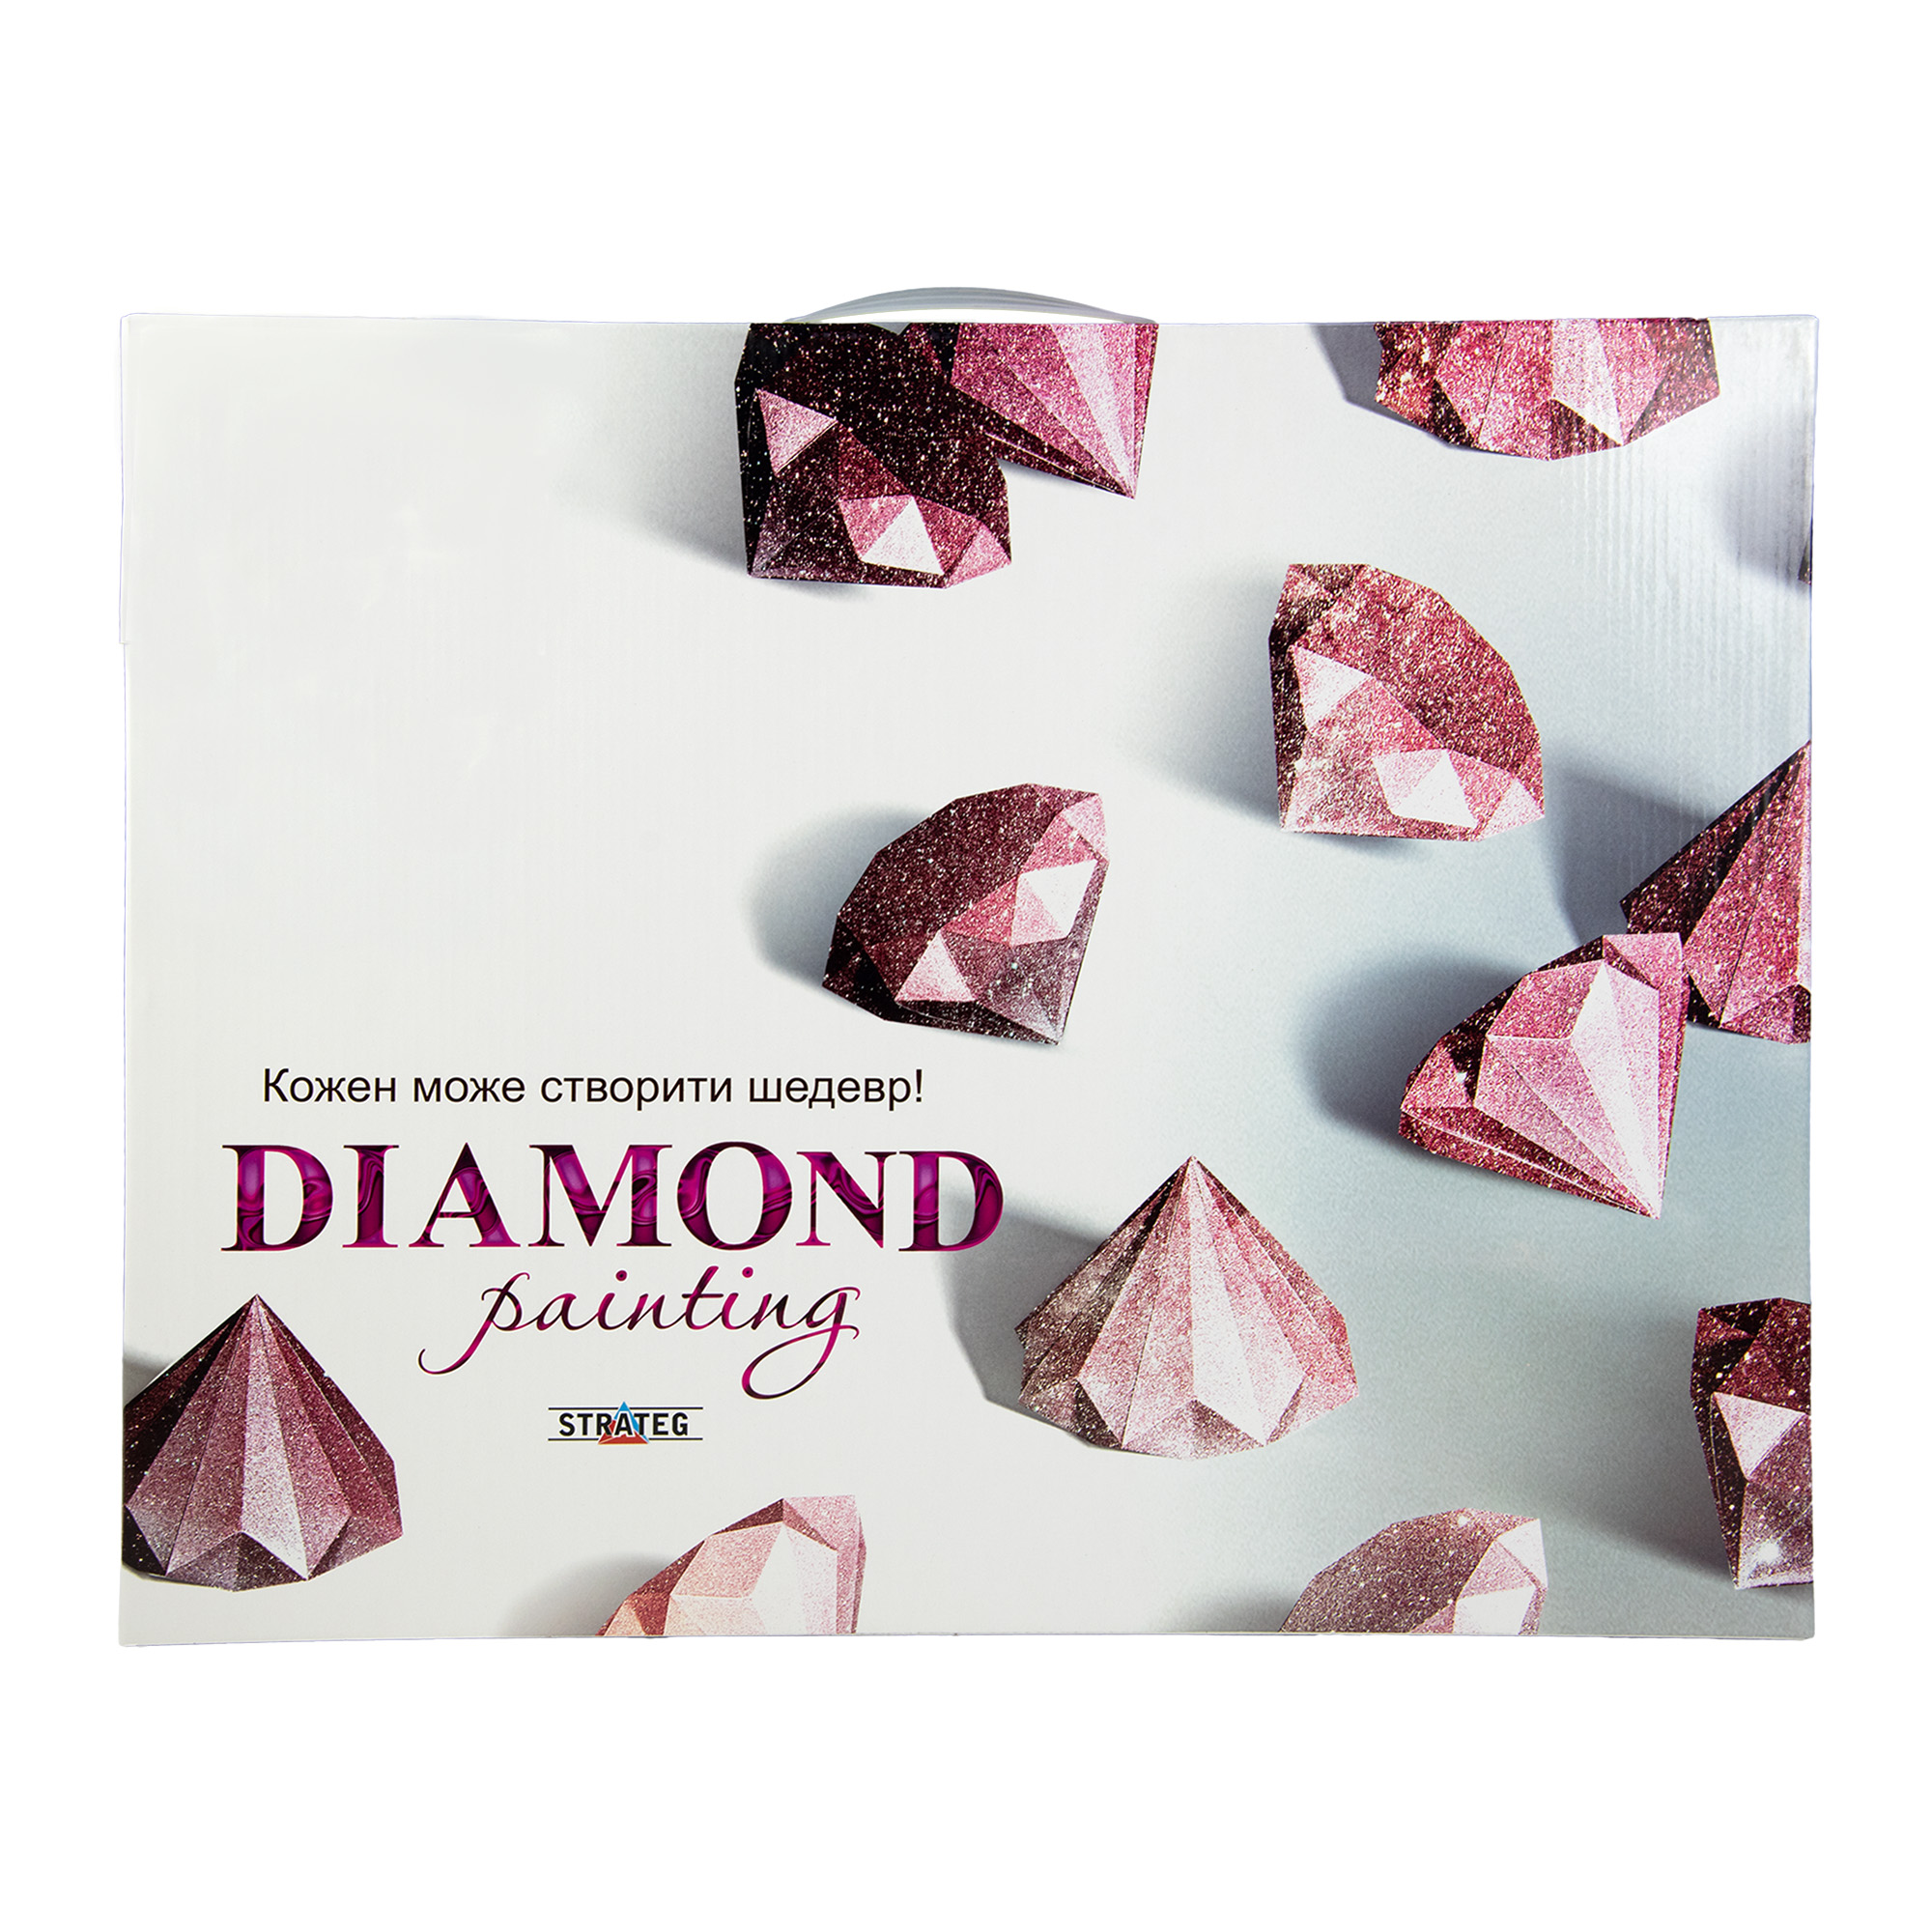 Diamantgemälde Strateg PREMIUM Dobermann, Größe 40x50 cm (L-081)